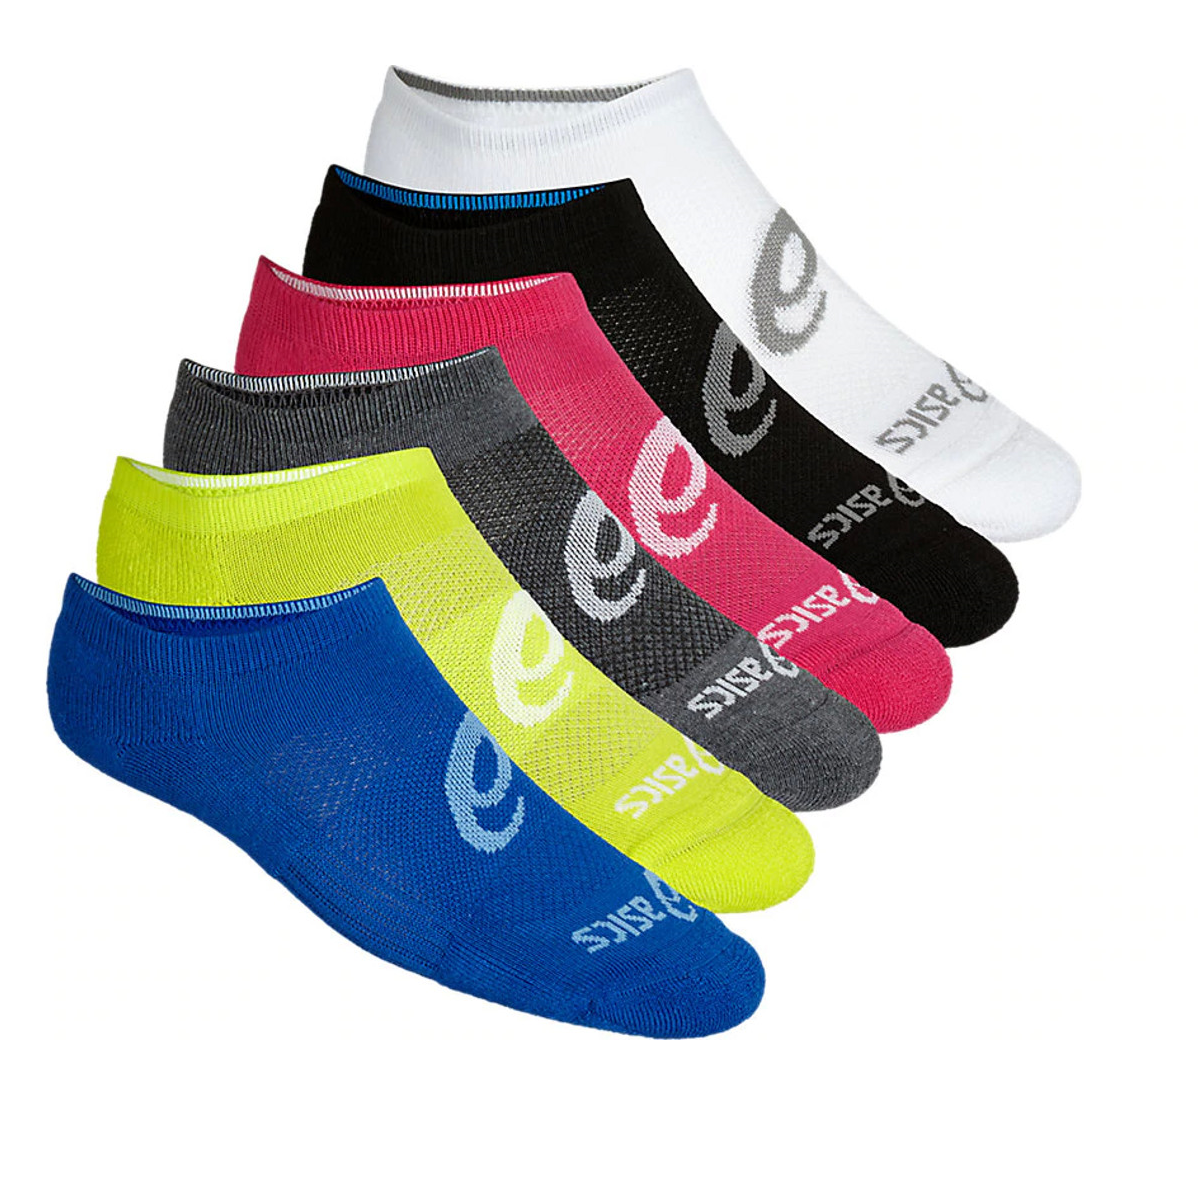 Asics Sportsocken Herren atmungsaktiv 12 Sneaker Paar Laufsocken eBay / | 6 Socken